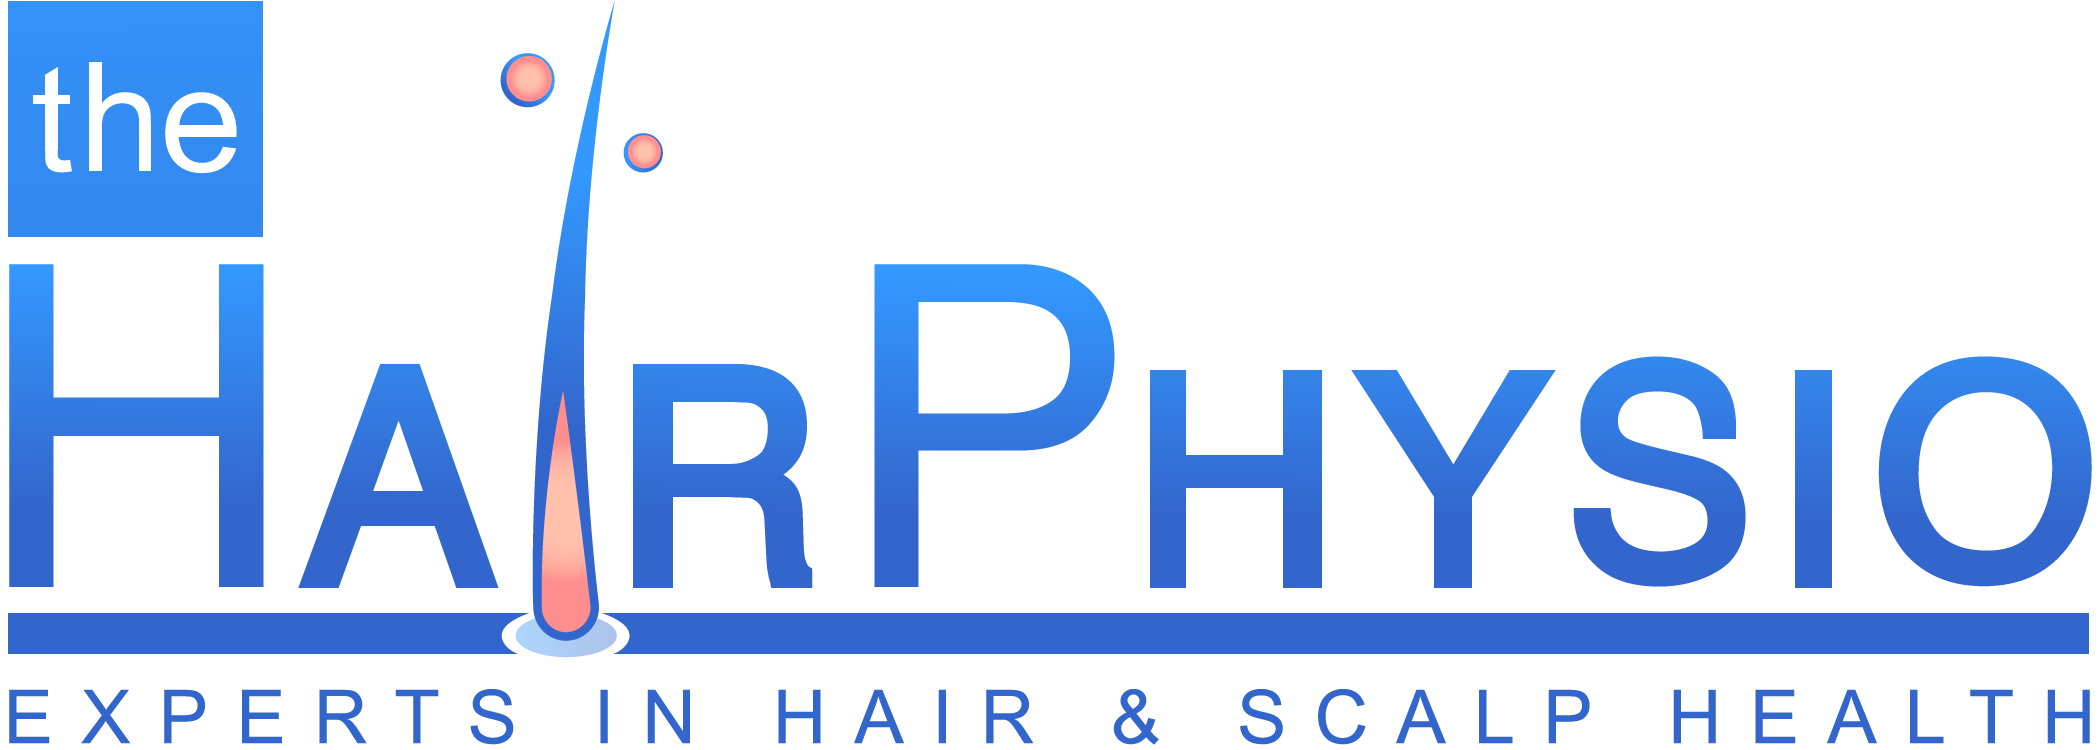 The HairPhysio